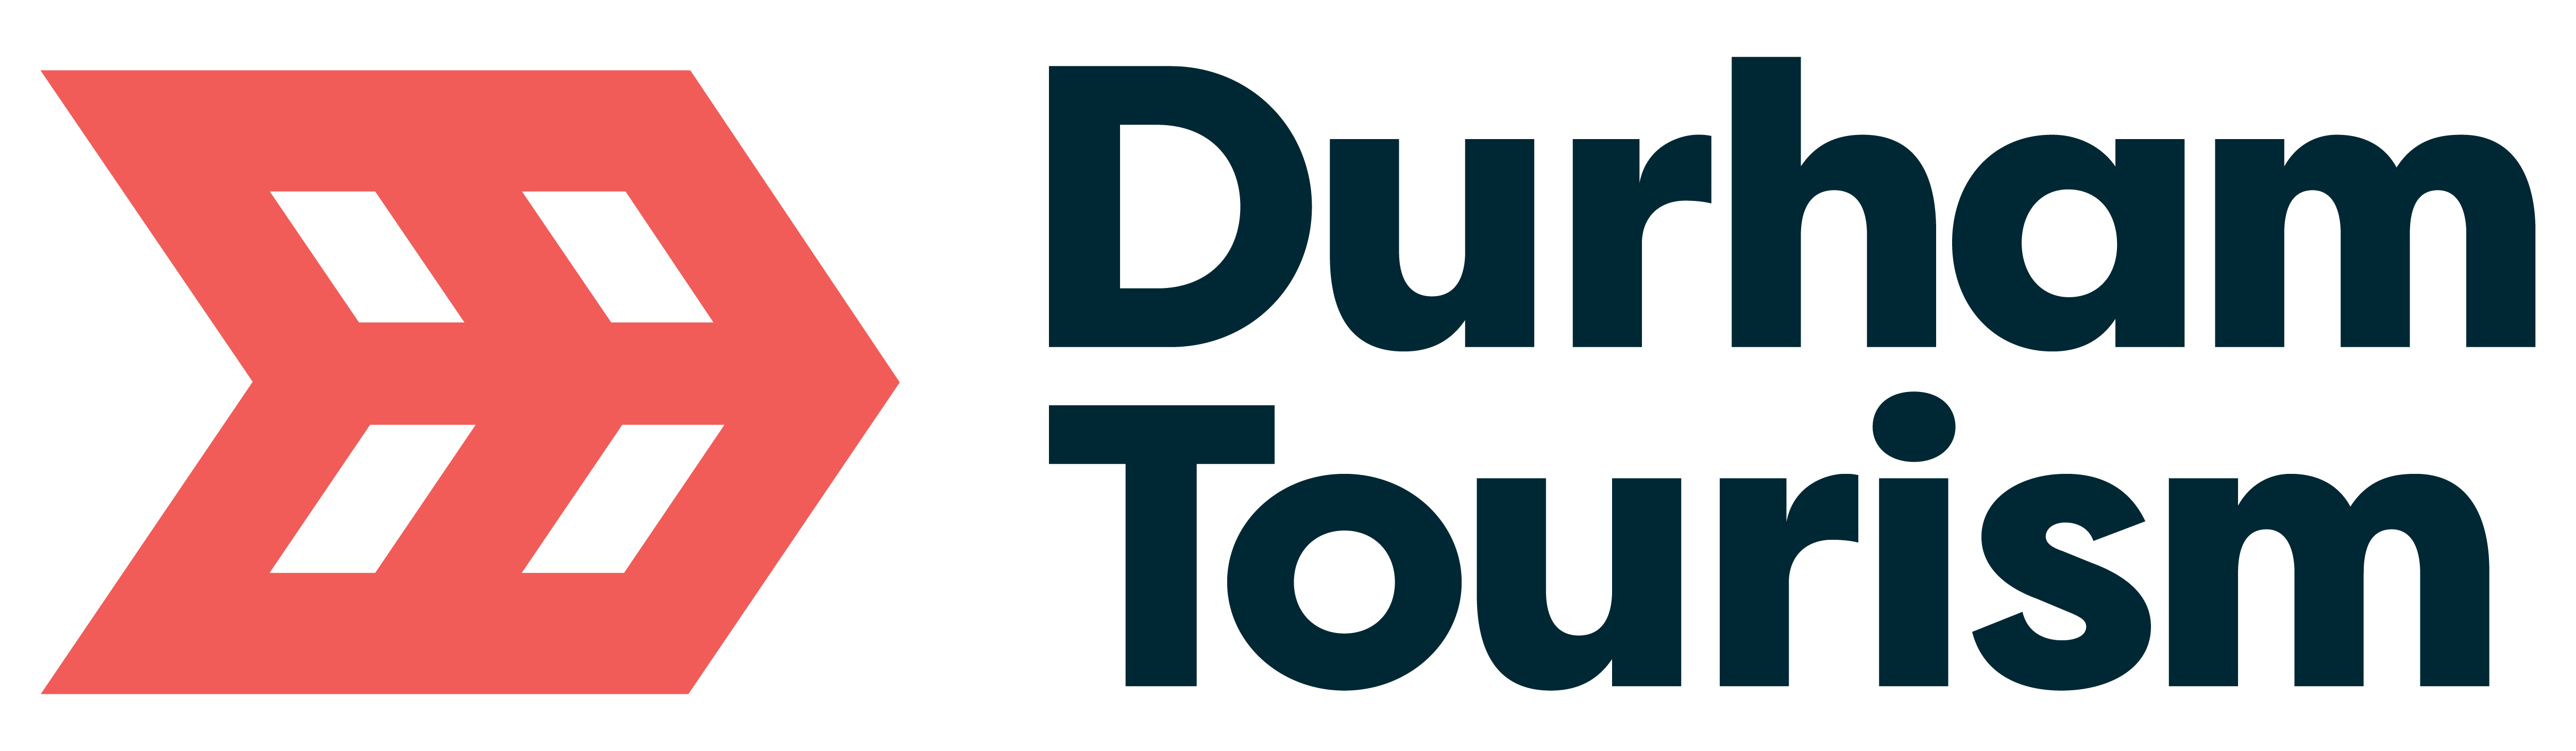 Durham Tourism